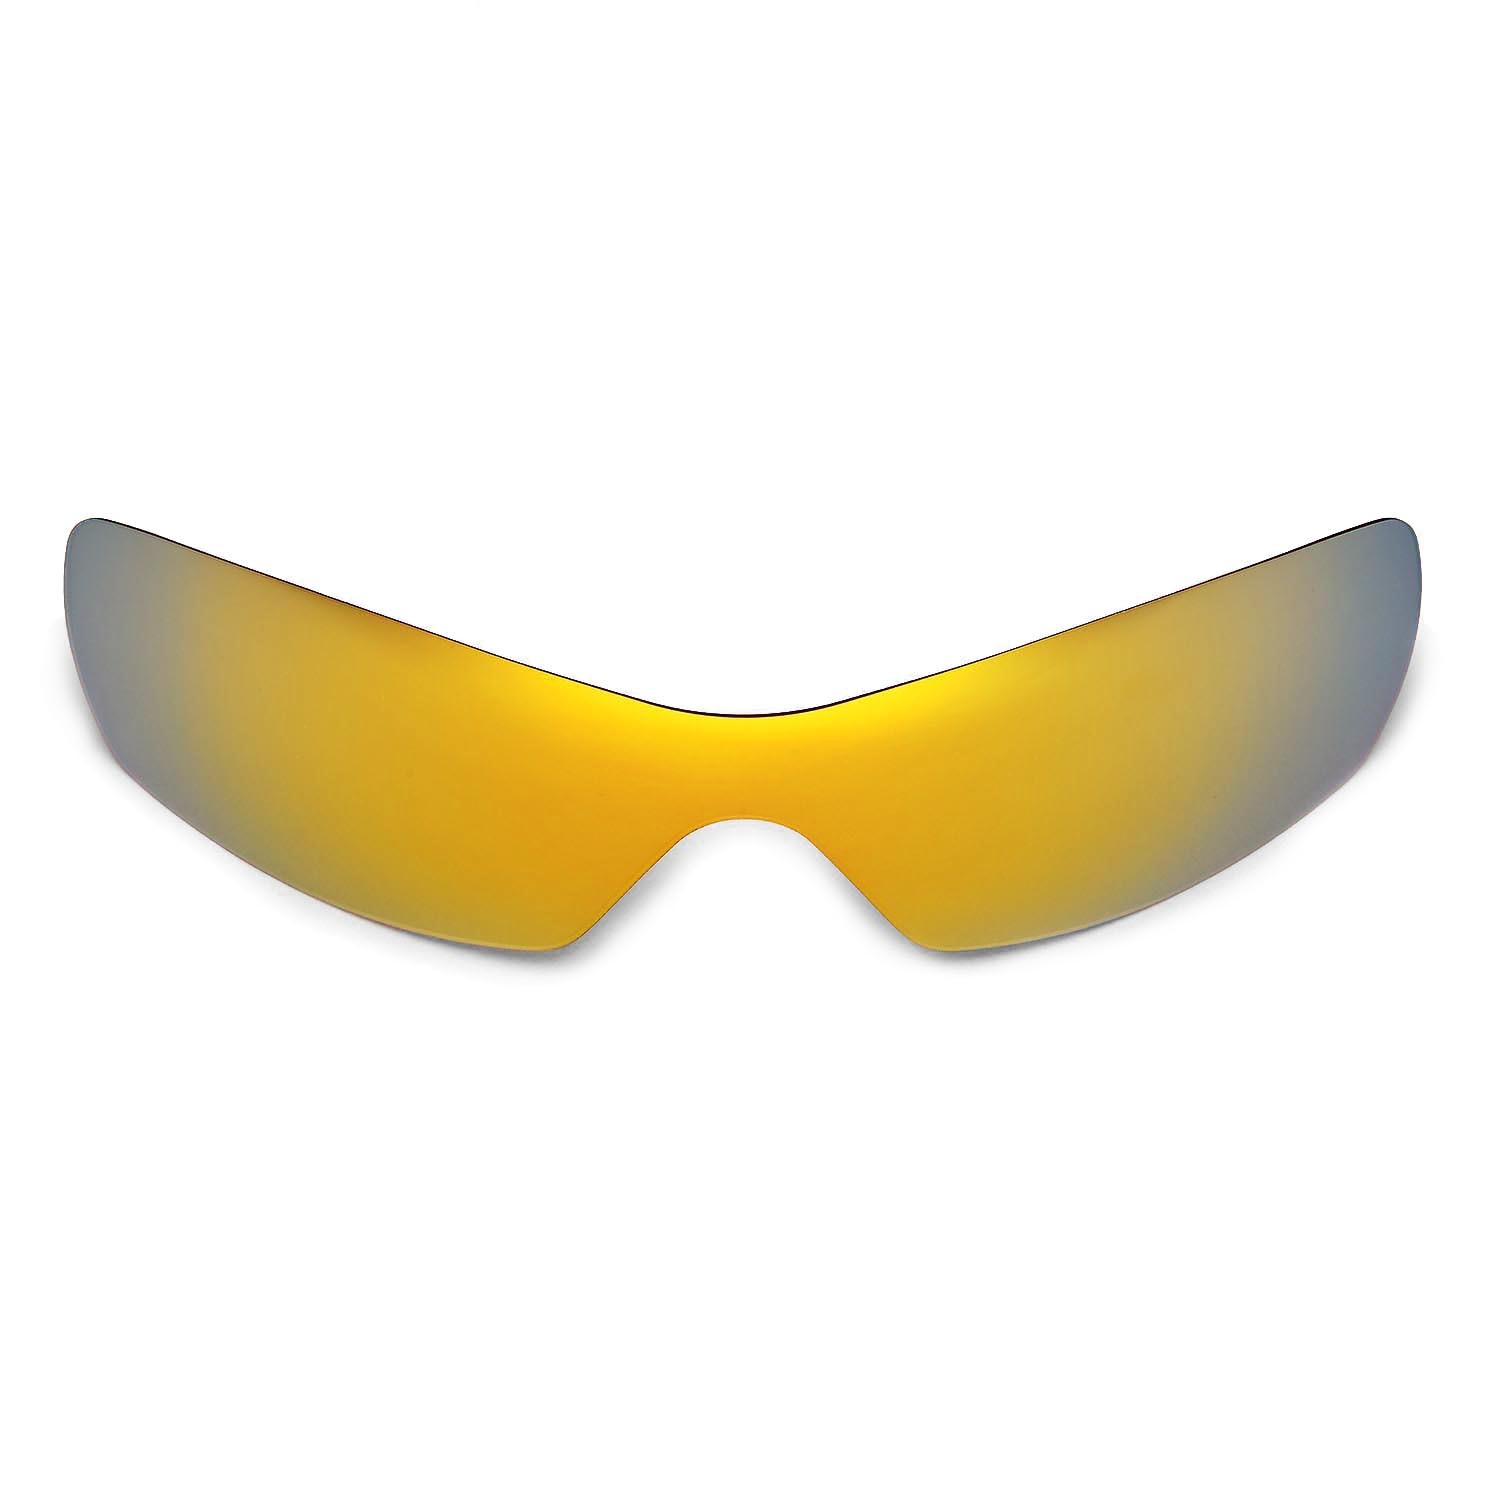 2021 TAC polarized sunglasses lens